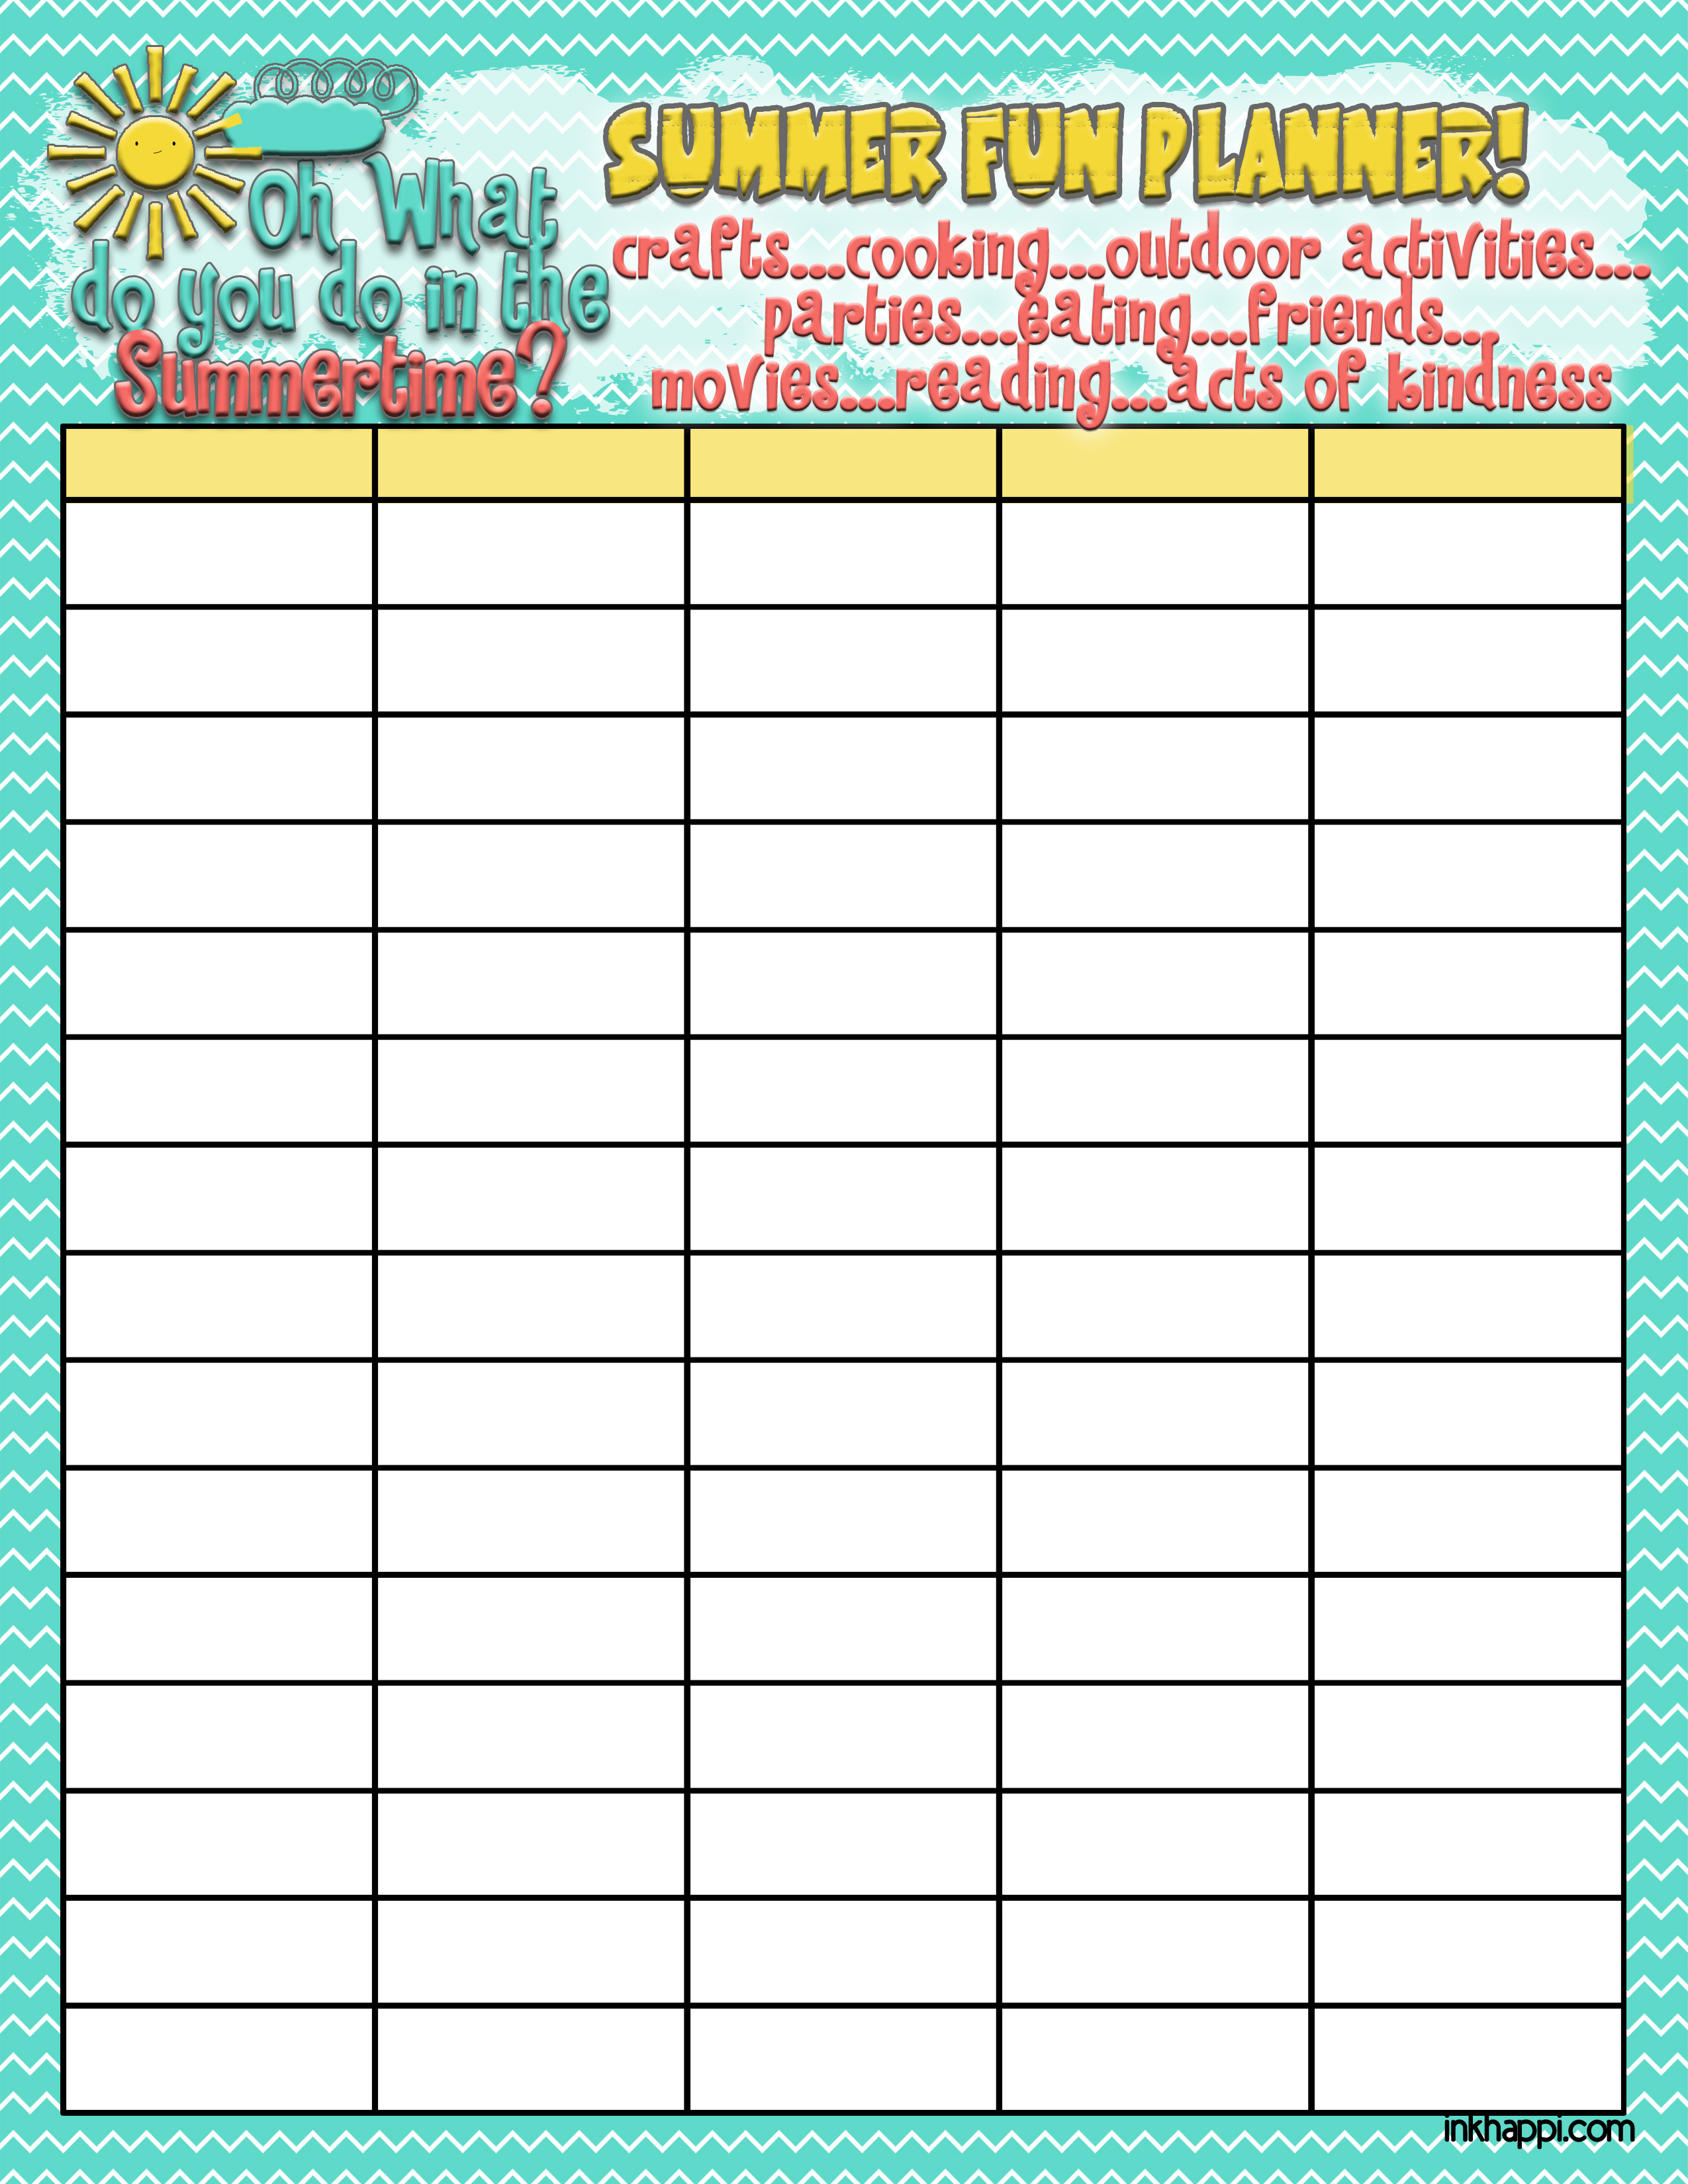 Summer Planning Calendars, Bucket List and Ideas! inkhappi